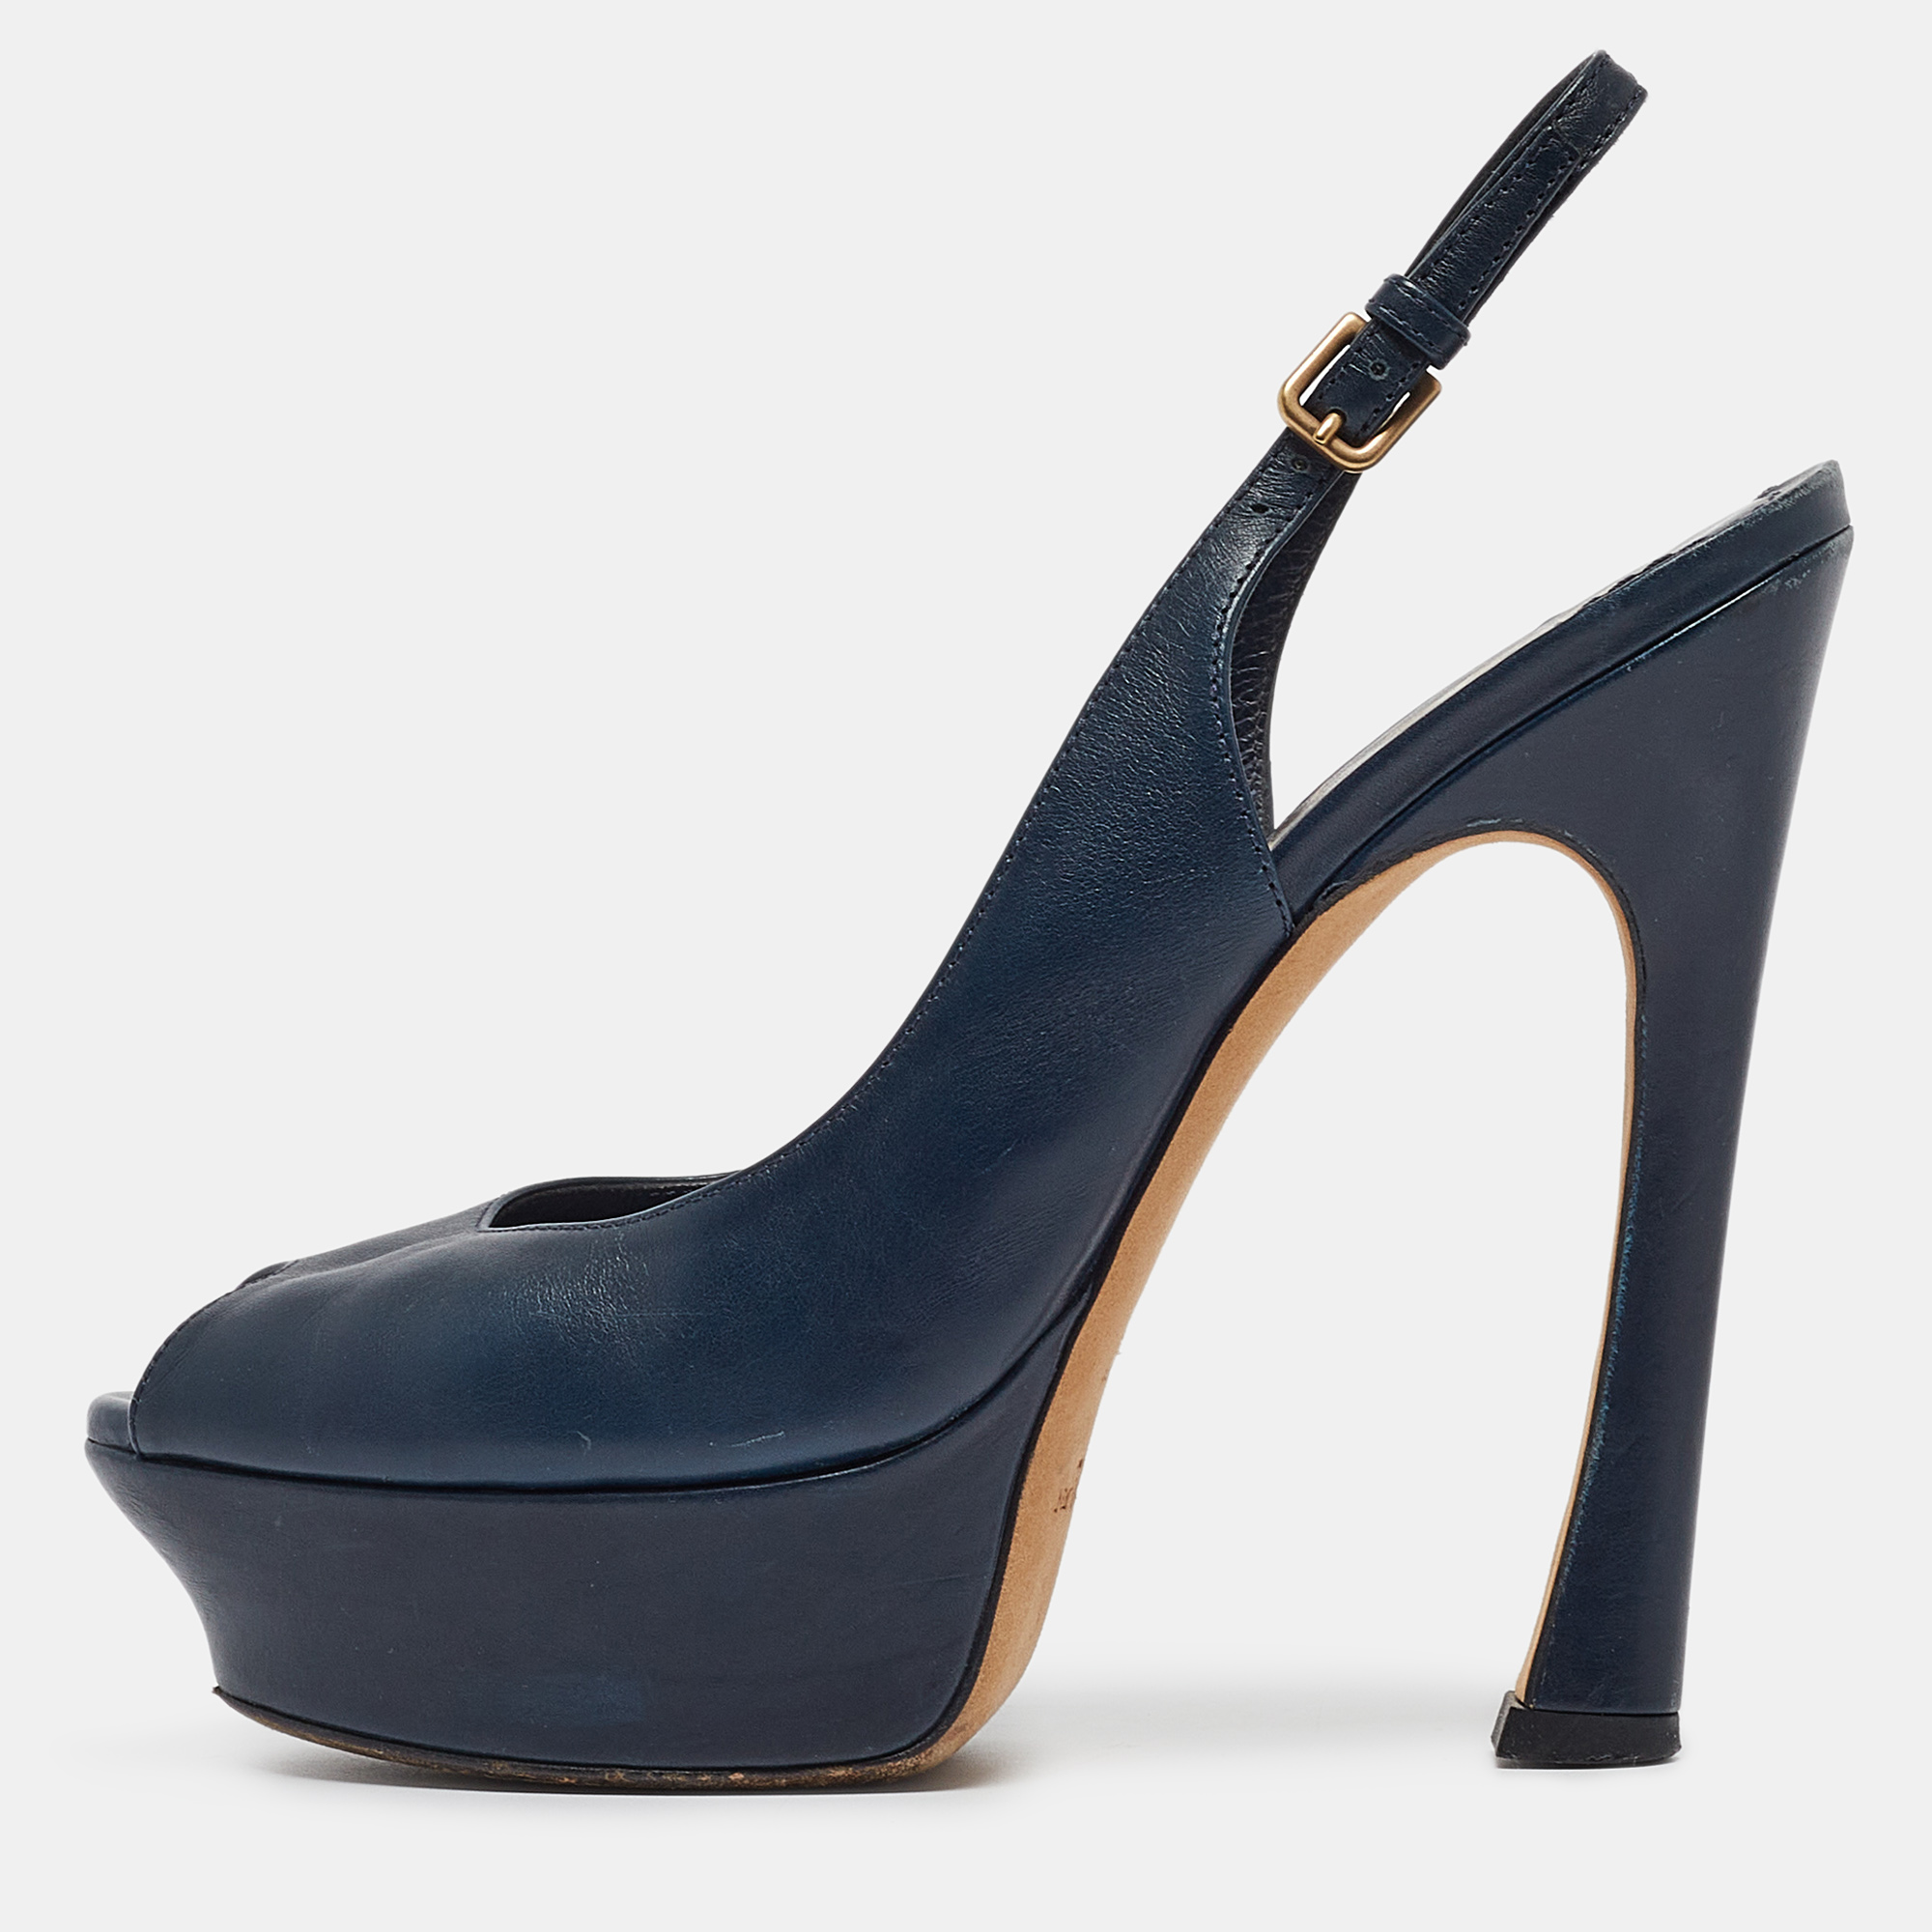 Yves saint laurent navy blue leather peep toe platform slingback pumps size 36